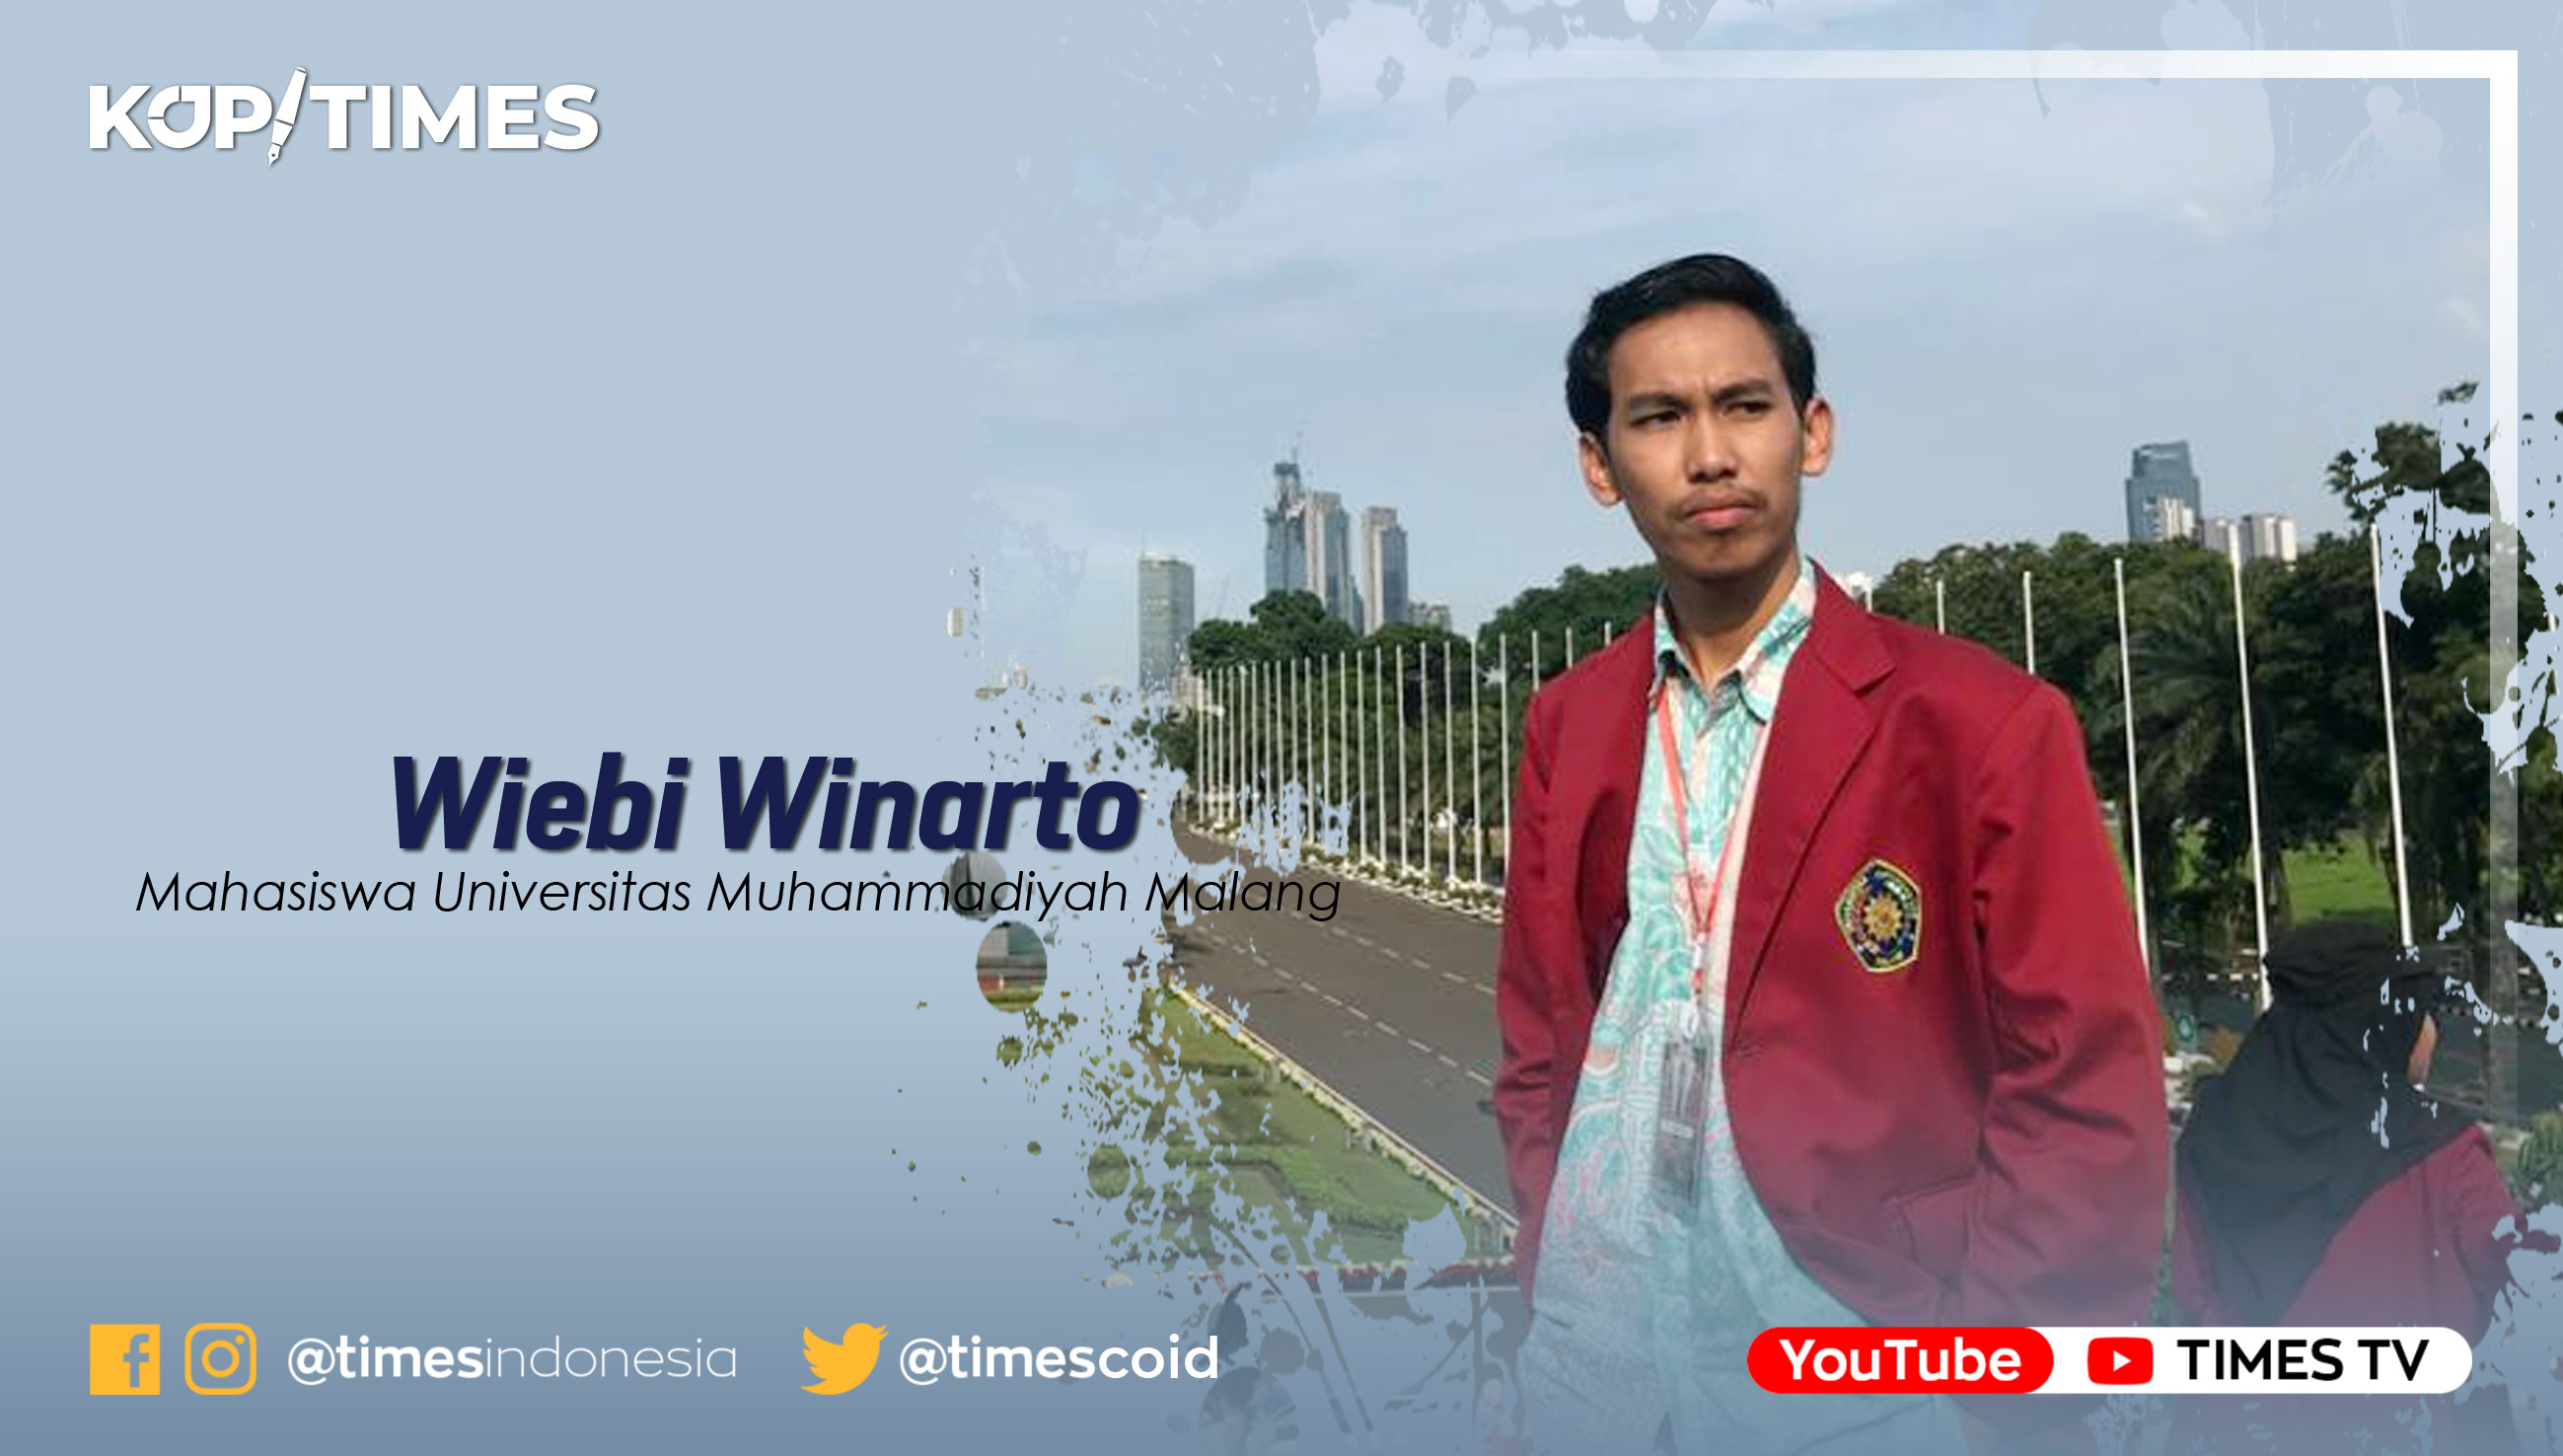 Wiebi Winarto, Mahasiswa Universitas Muhammadiyah Malang.